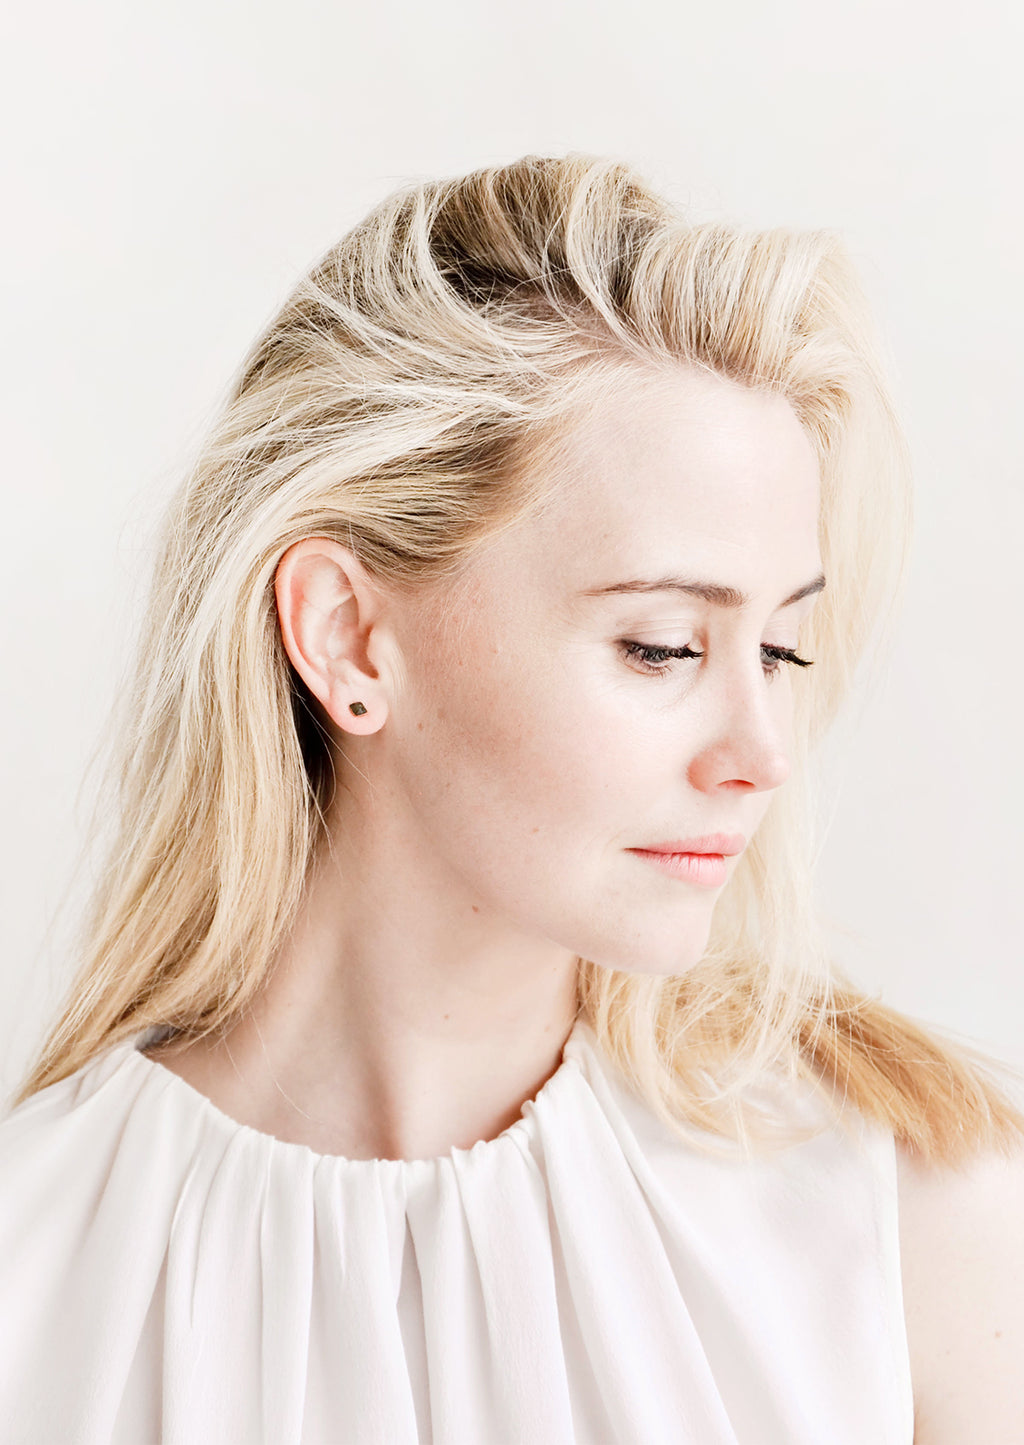 3: Model wears stud earrings and white blouse.